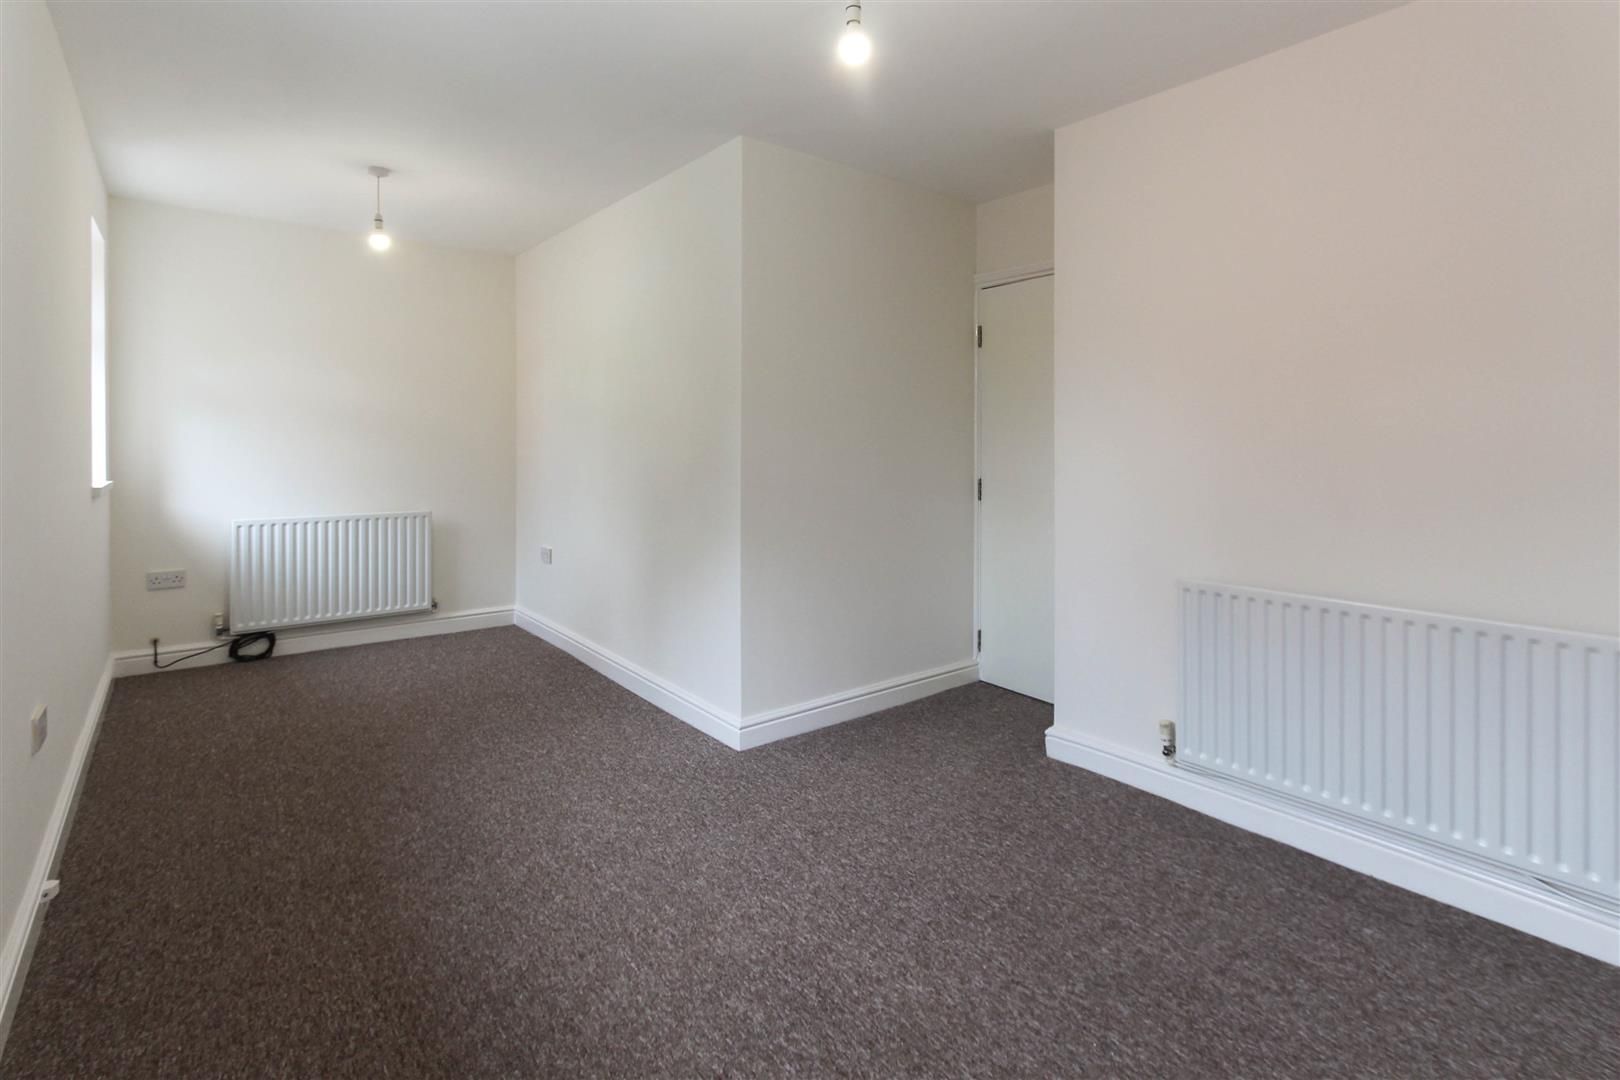 2 Bedroom Flat To Rent Doyle Avenue Fairwater Cardiff Cf